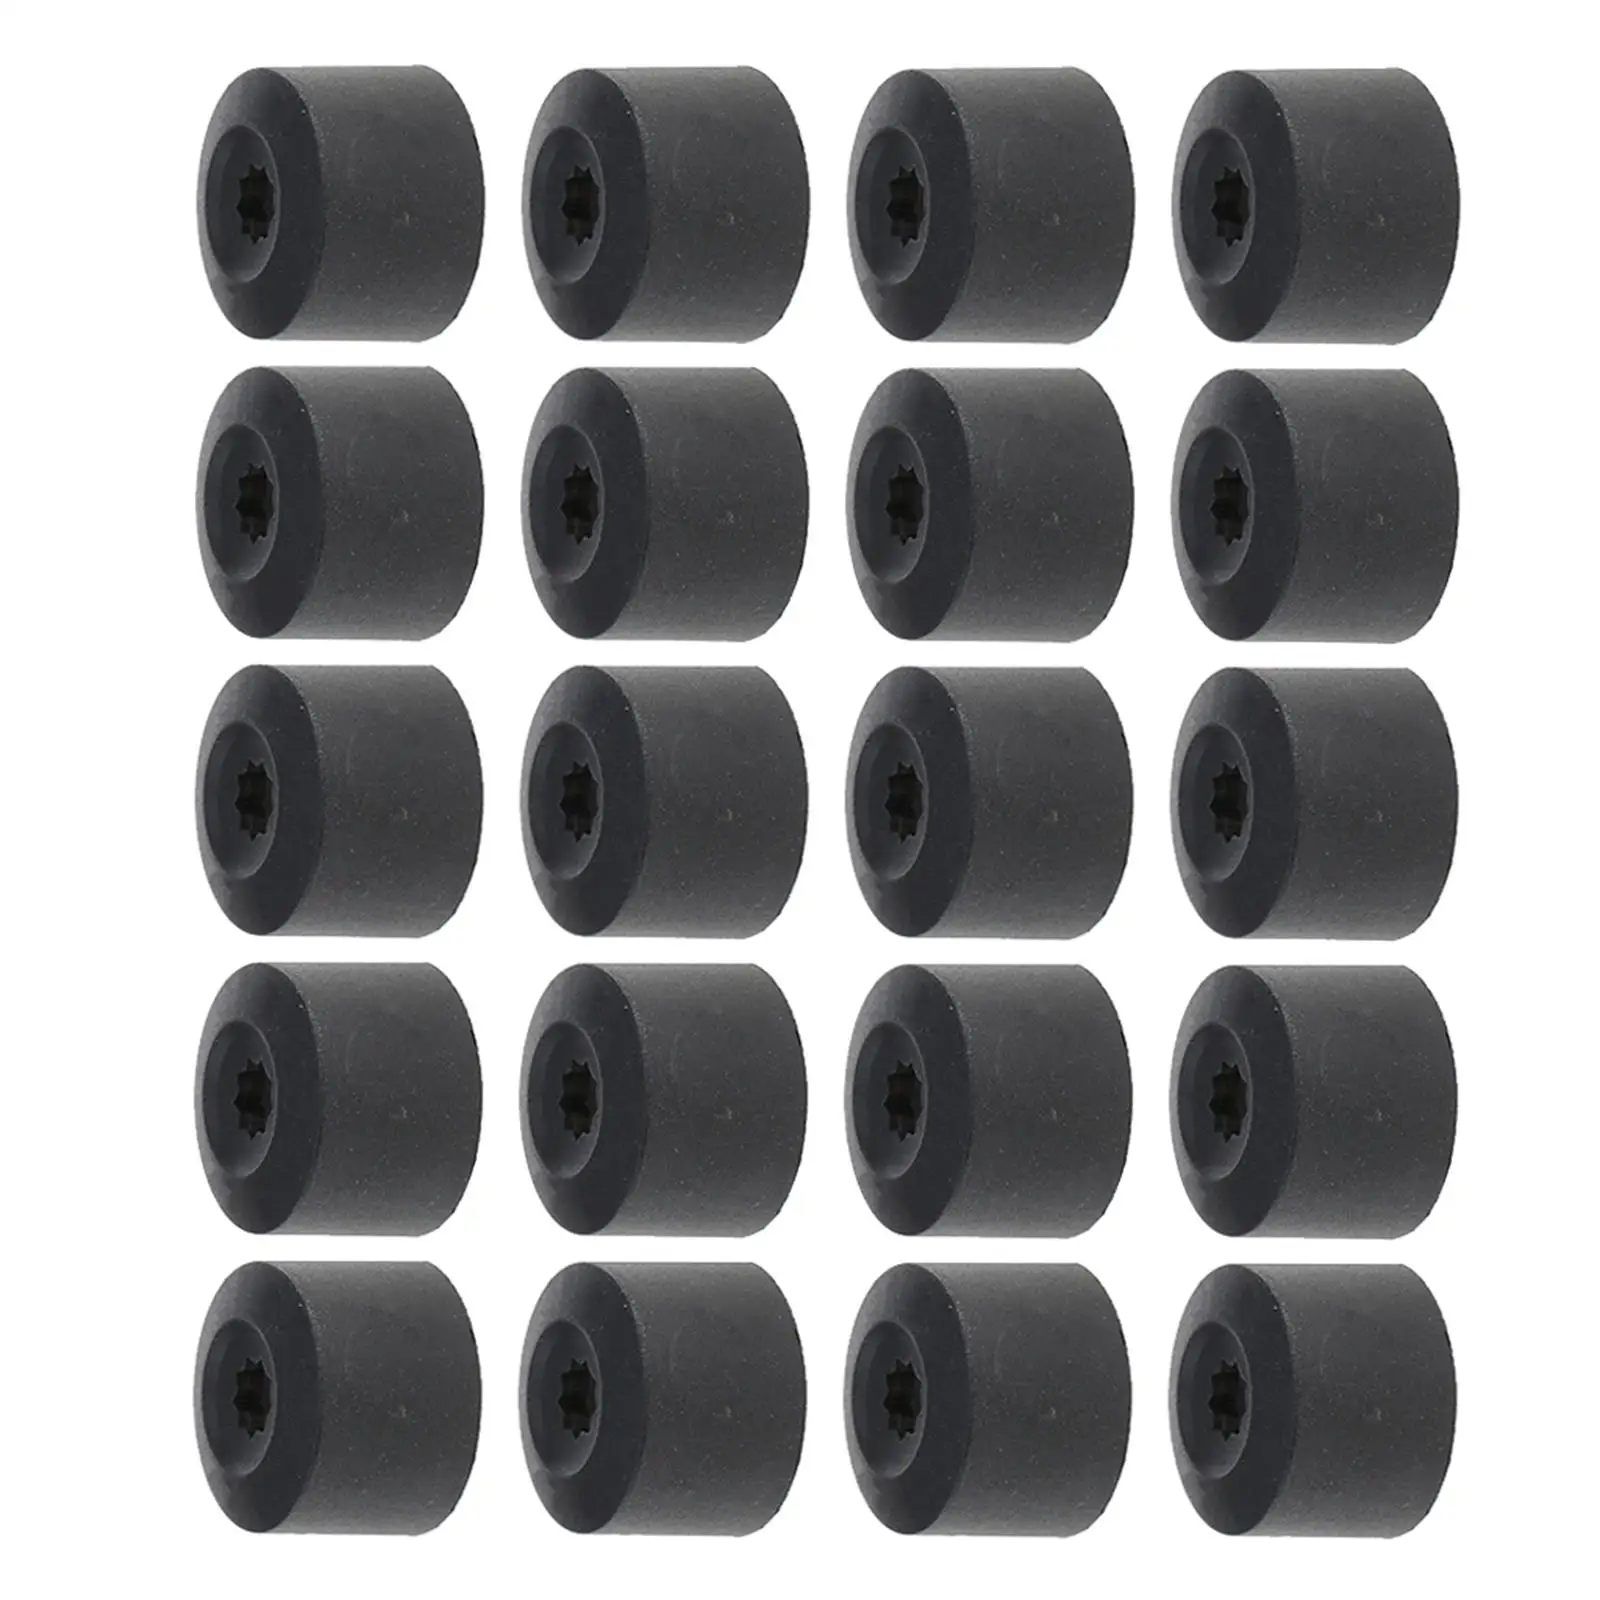 20PCS Wheel Lug Nut   Cover Caps Set for vw   Golf Beetle